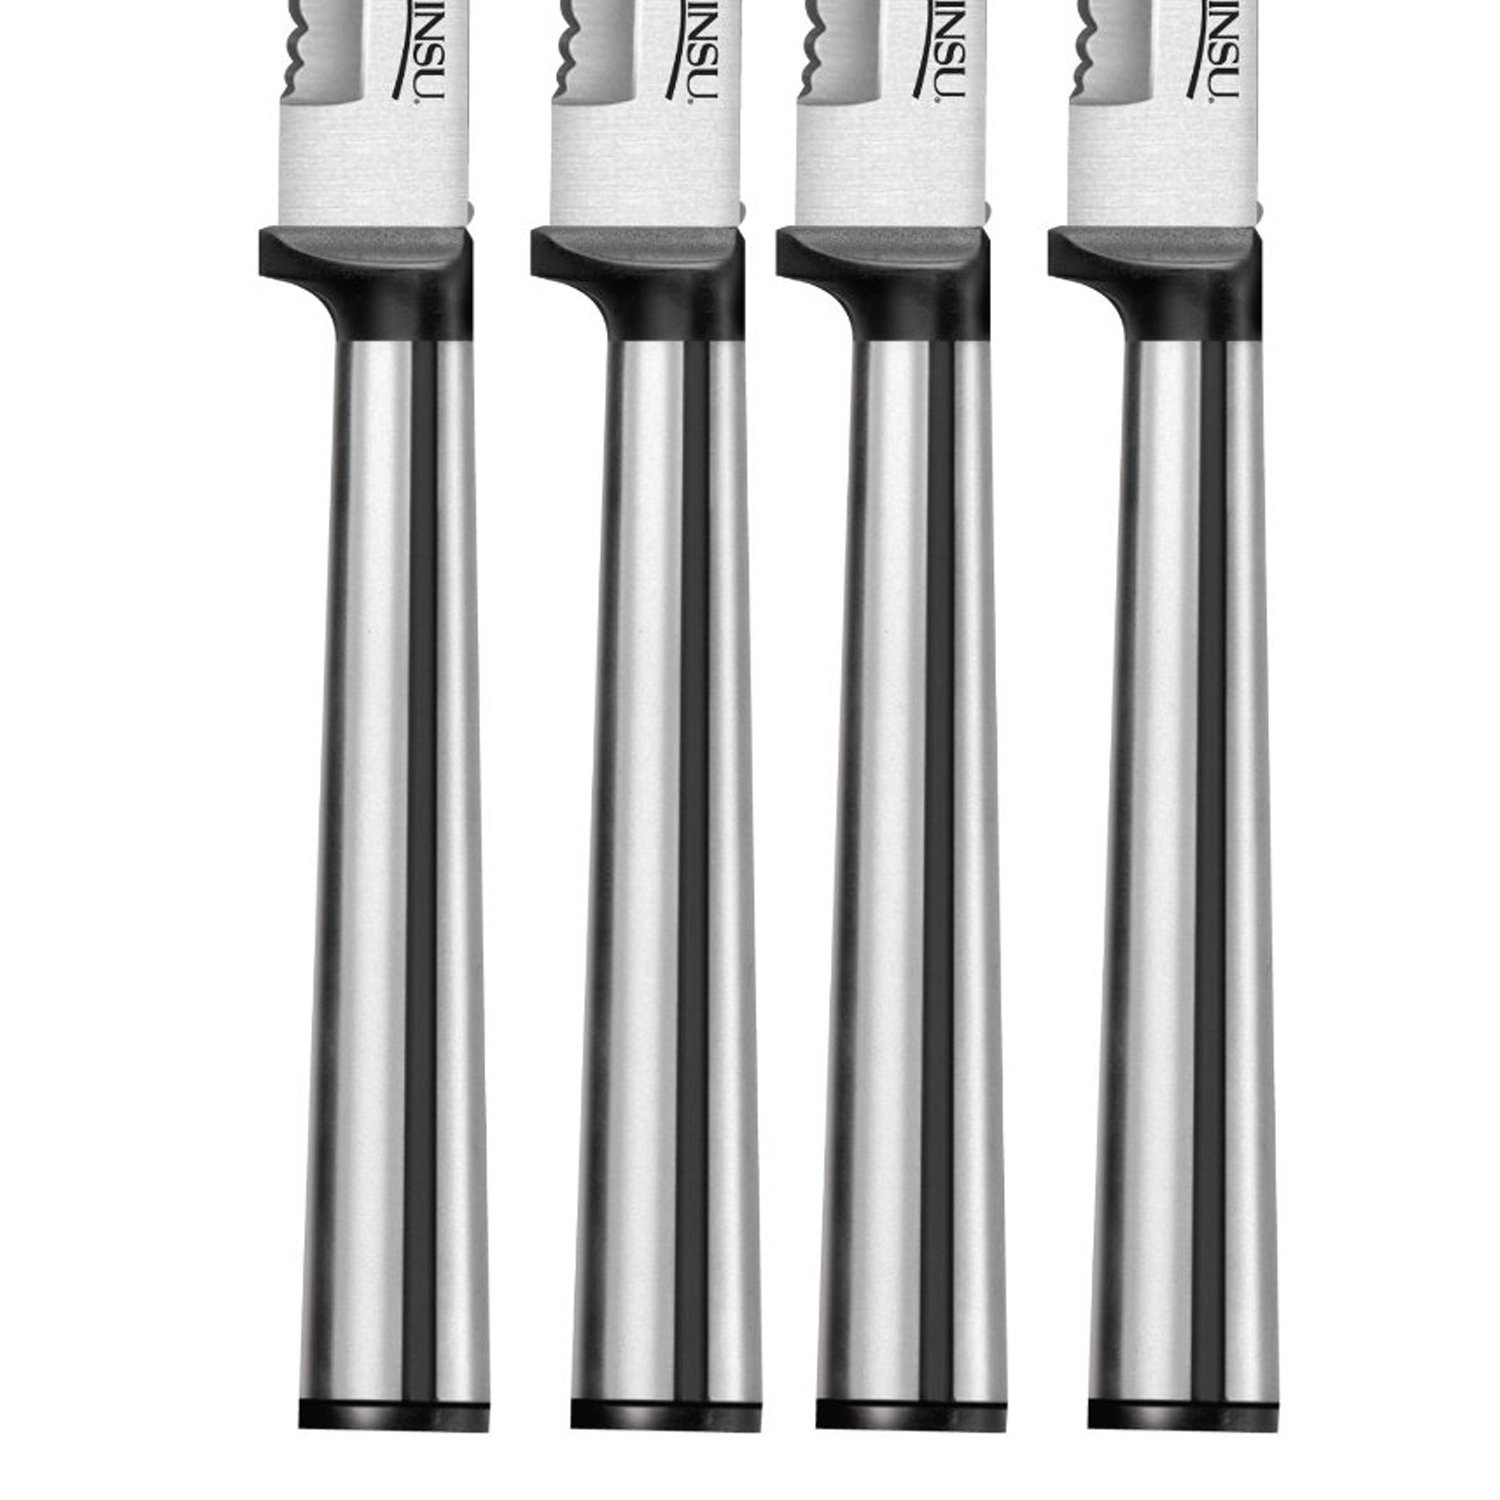 Ginsu Koden Series 4-Piece Stainless Steel Steak Knives Set – Serrated Knife Cutlery Set, 05217DS